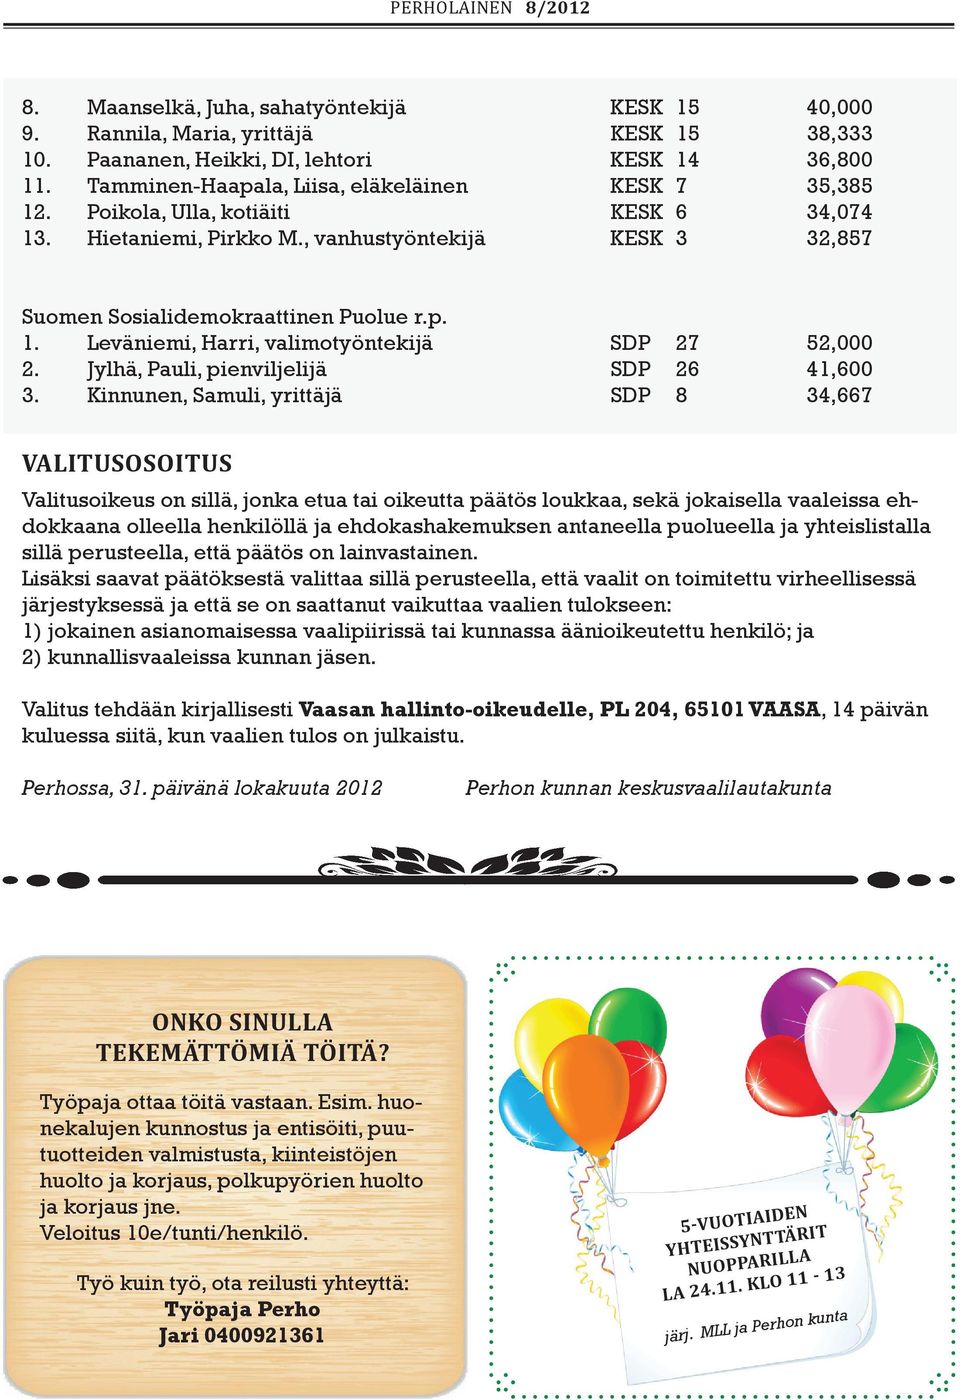 Jylhä, Pauli, pienviljelijä SDP 26 41,600 3.